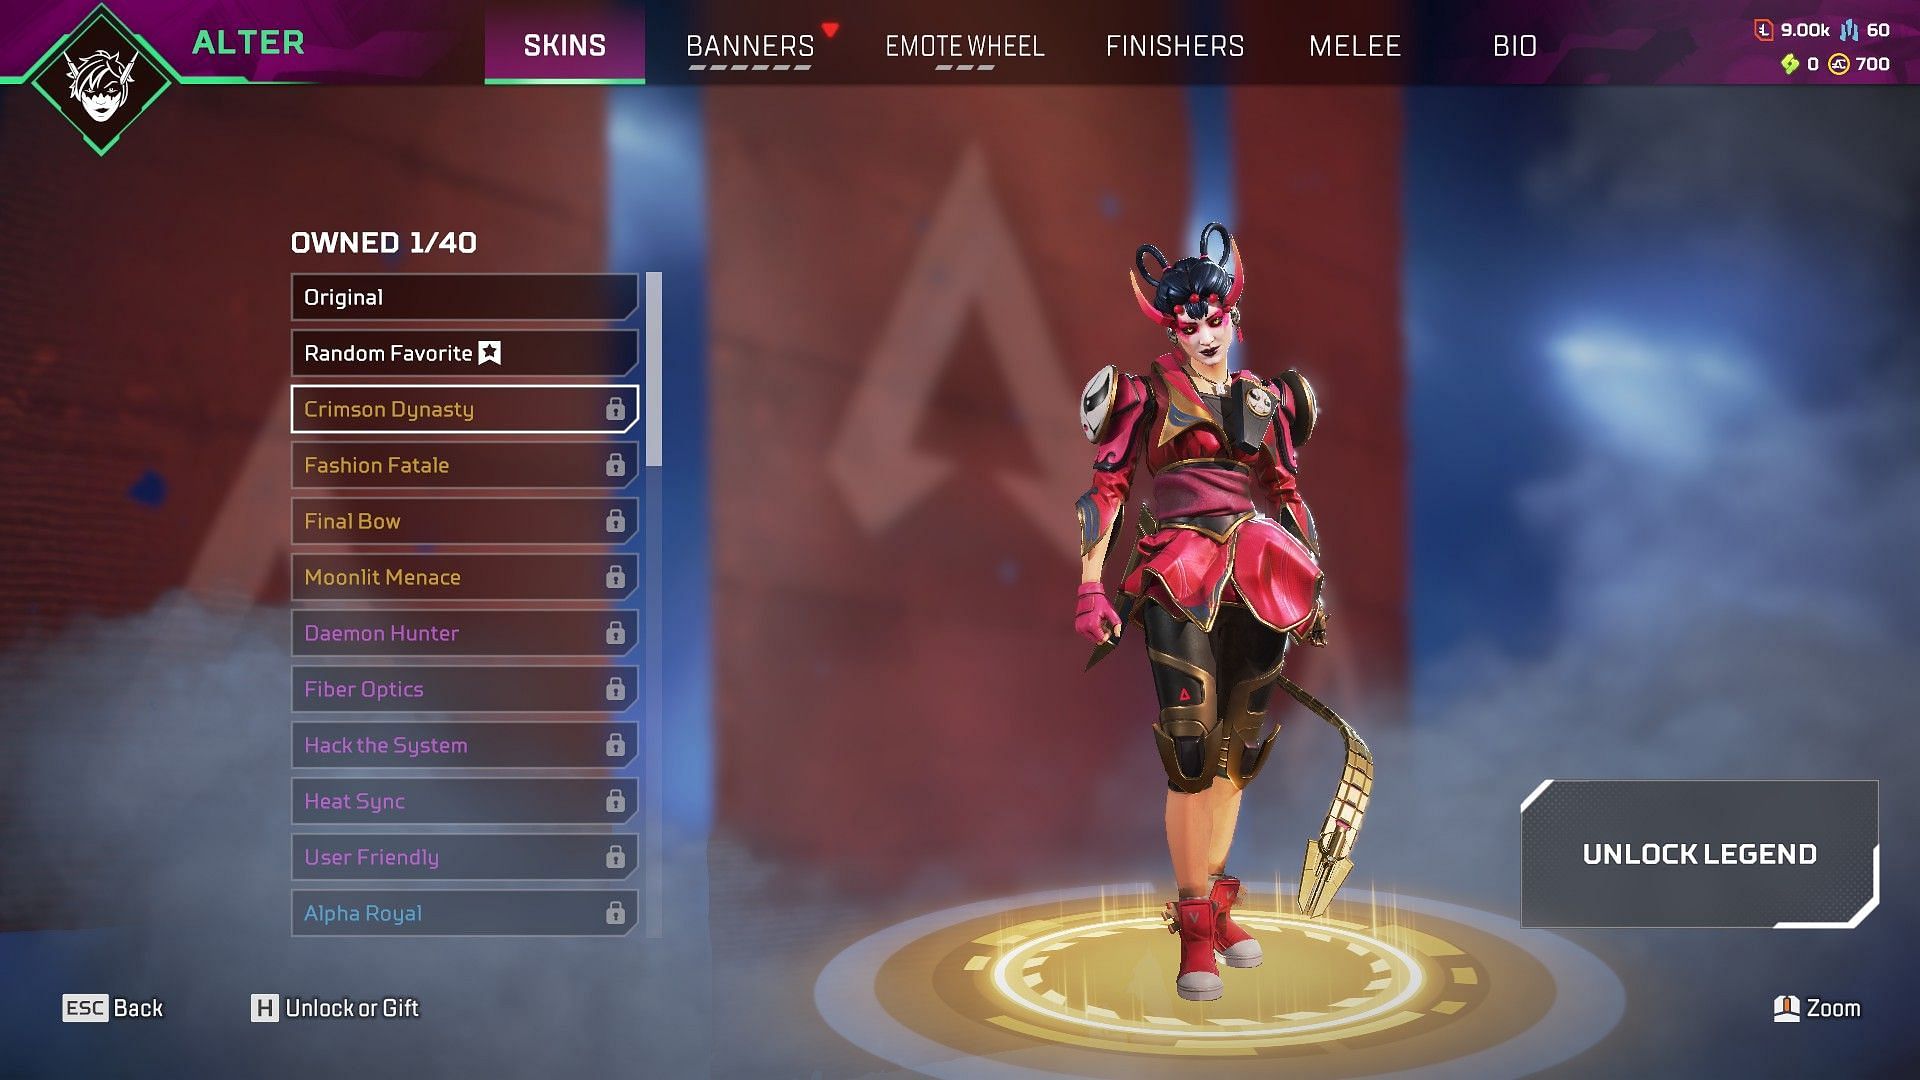 Crimson Dynasty Legendary Alter skin (Image via Electronic Arts)